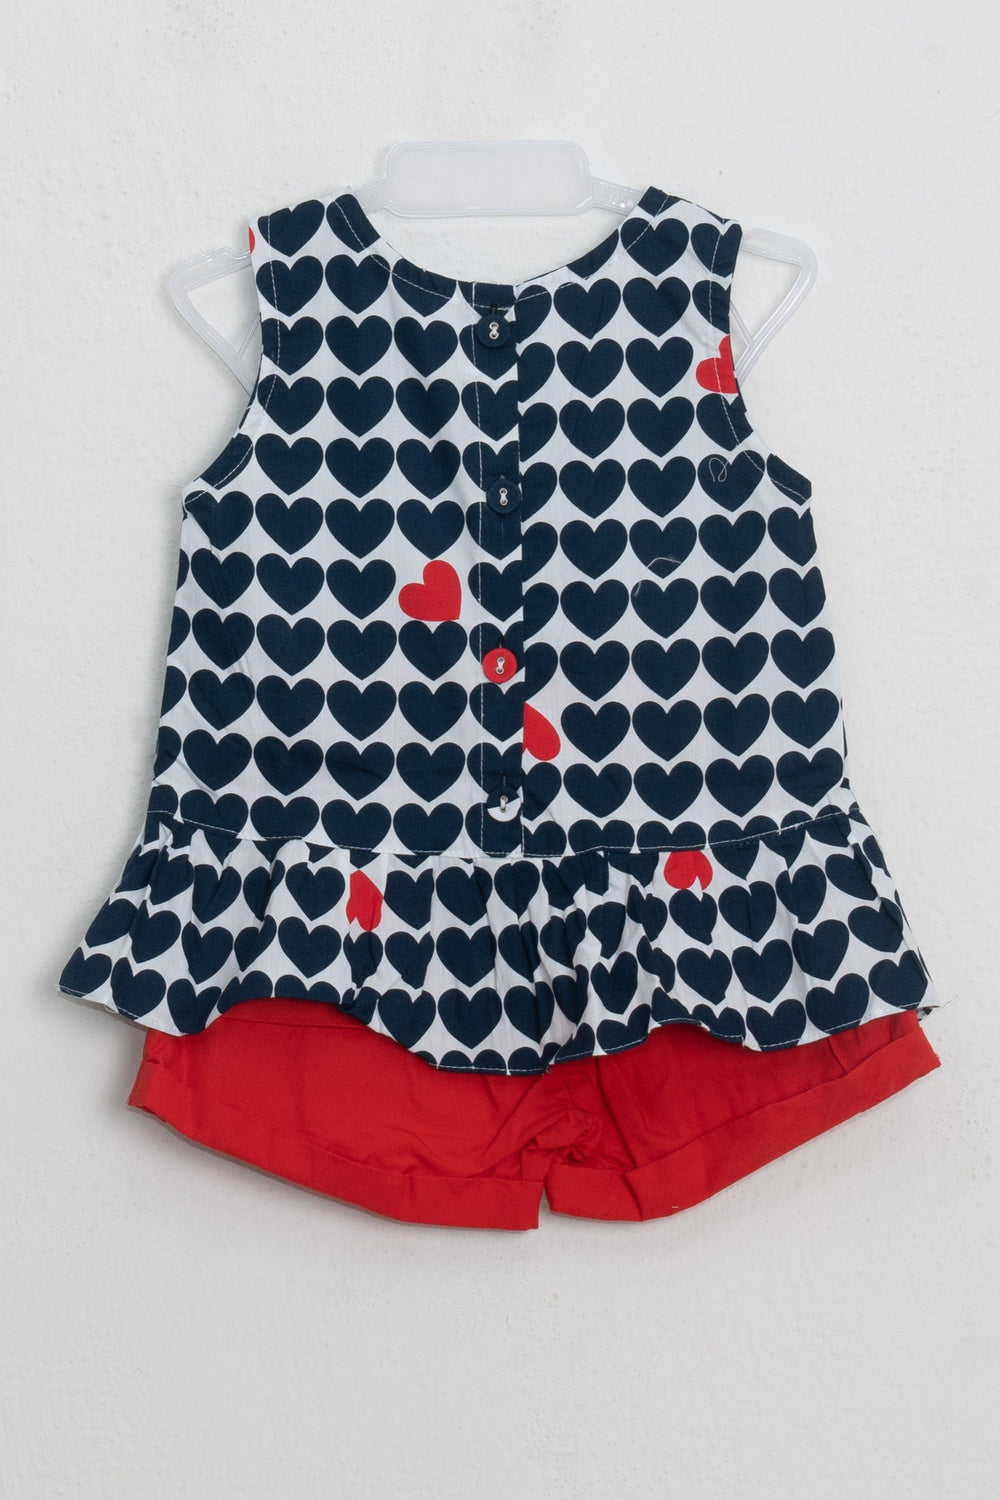 The Nesavu Baby Frock / Jhabla Stunning Navy Blue Heartin Printed Sleeveless Top With Red Bottom For Baby Girls psr silks Nesavu